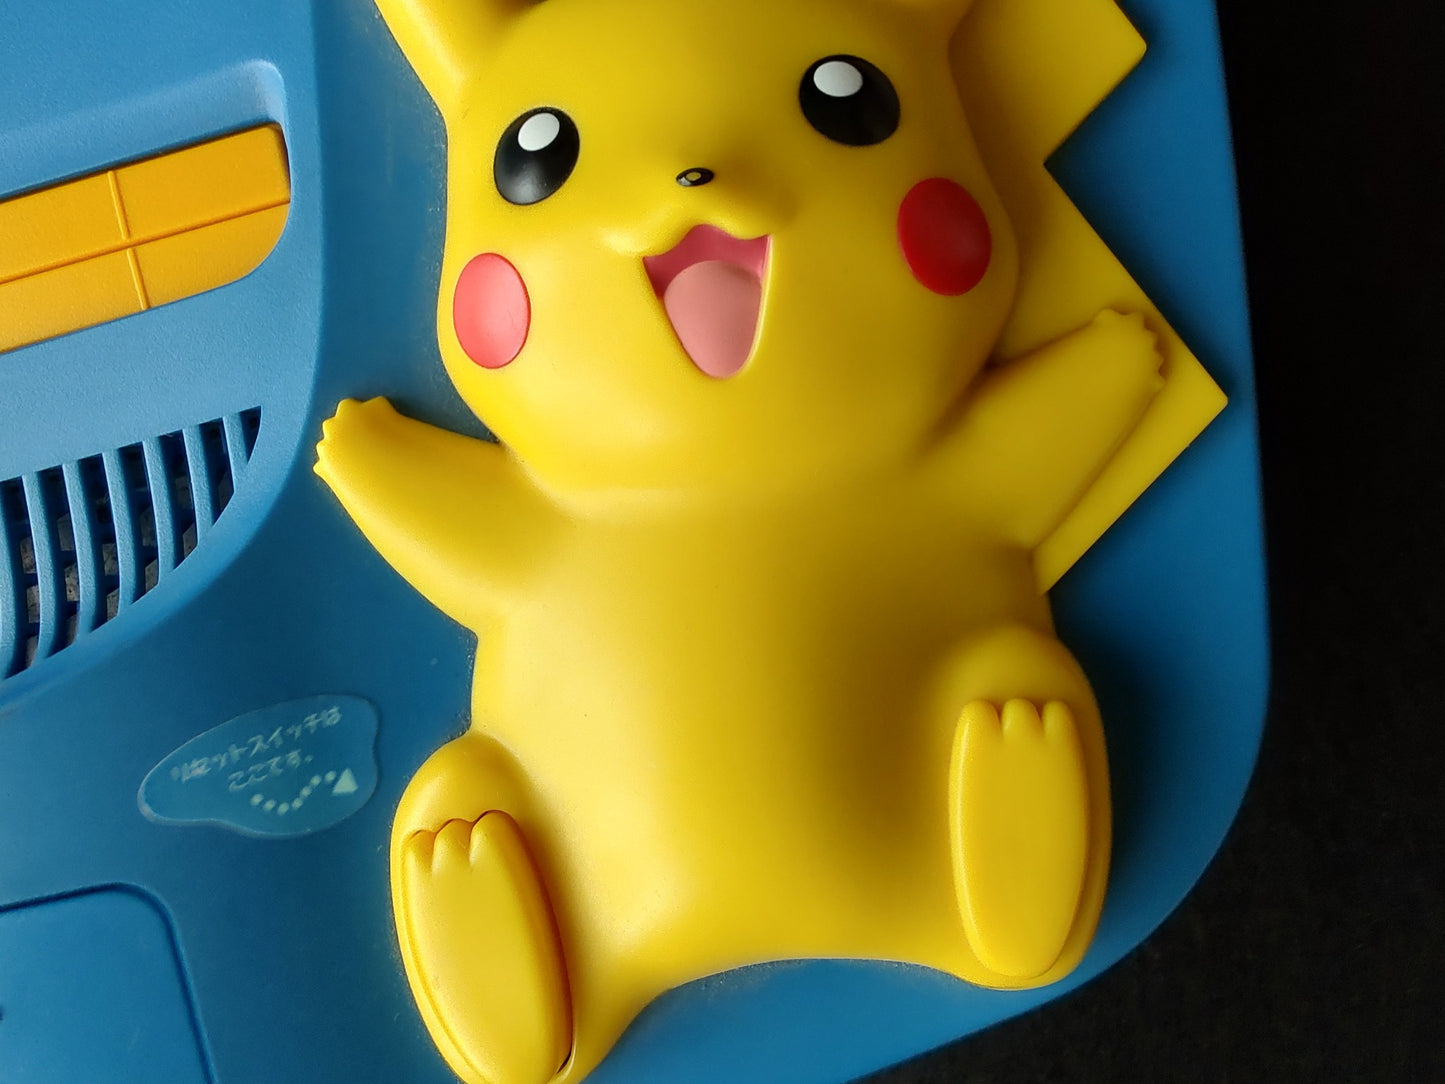 Nintendo64 Pokemon Pikachu limited Blue Color Console,Pad,PSU,AV cable set-f0529